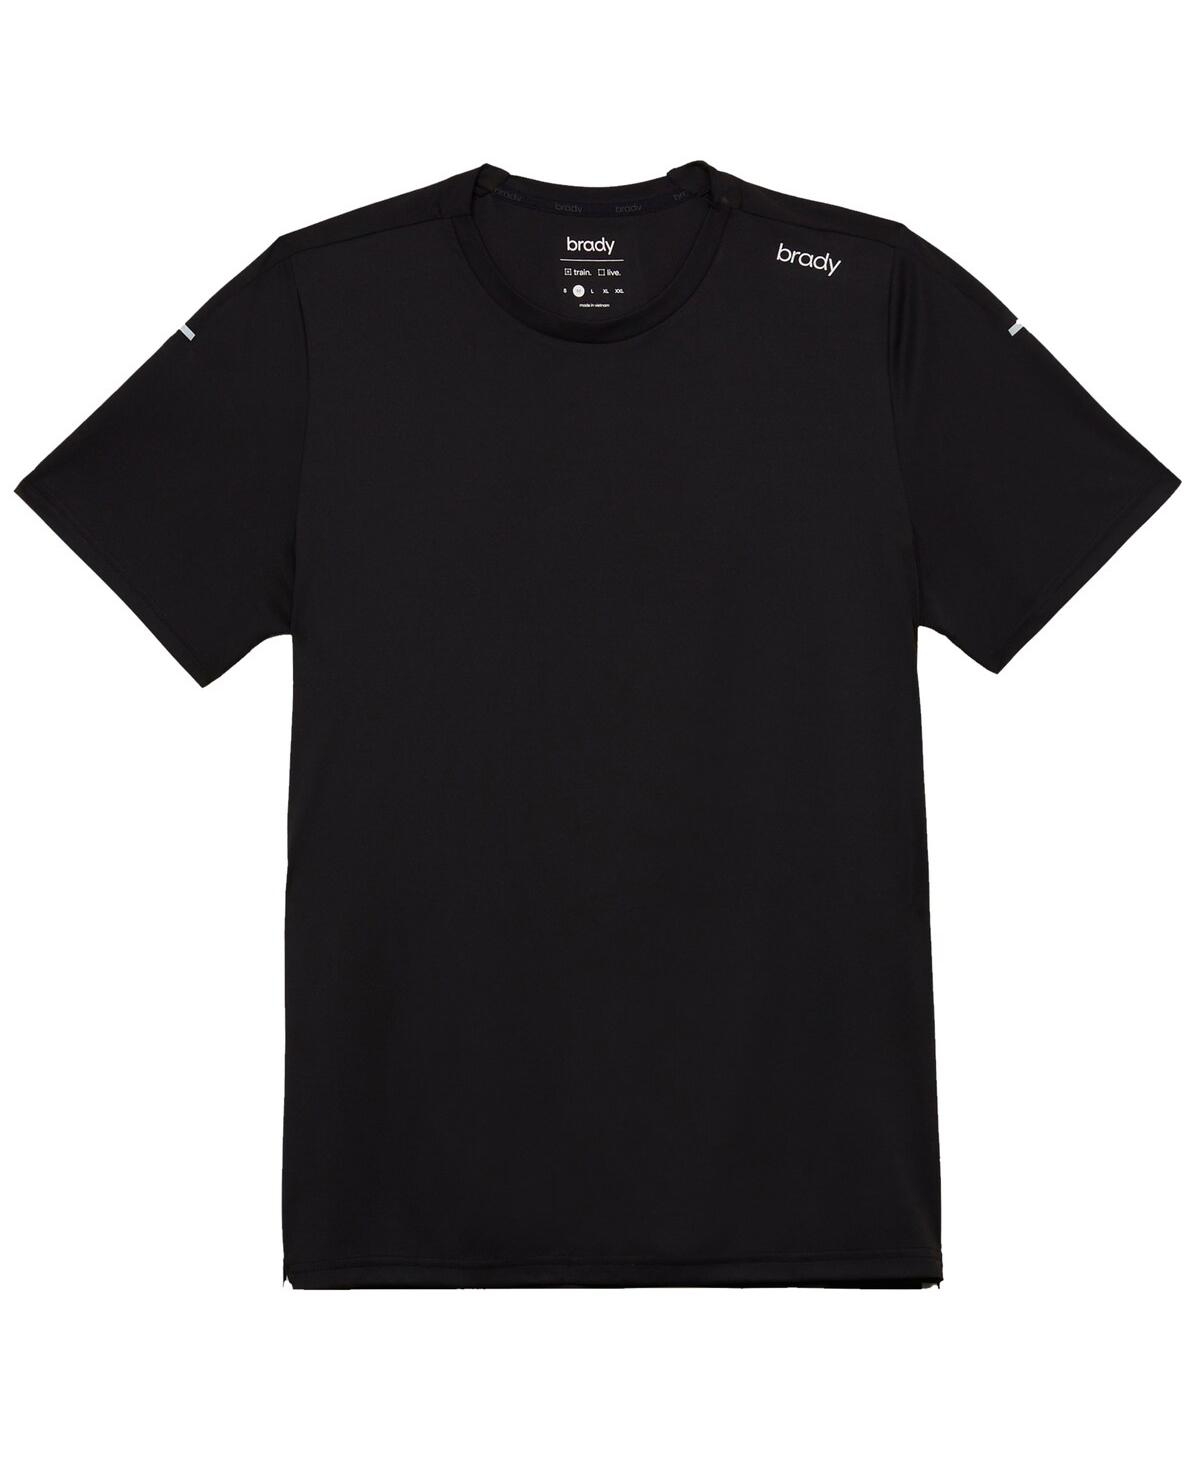 Men's Brady Black Cool Touch Performance T-shirt - Black